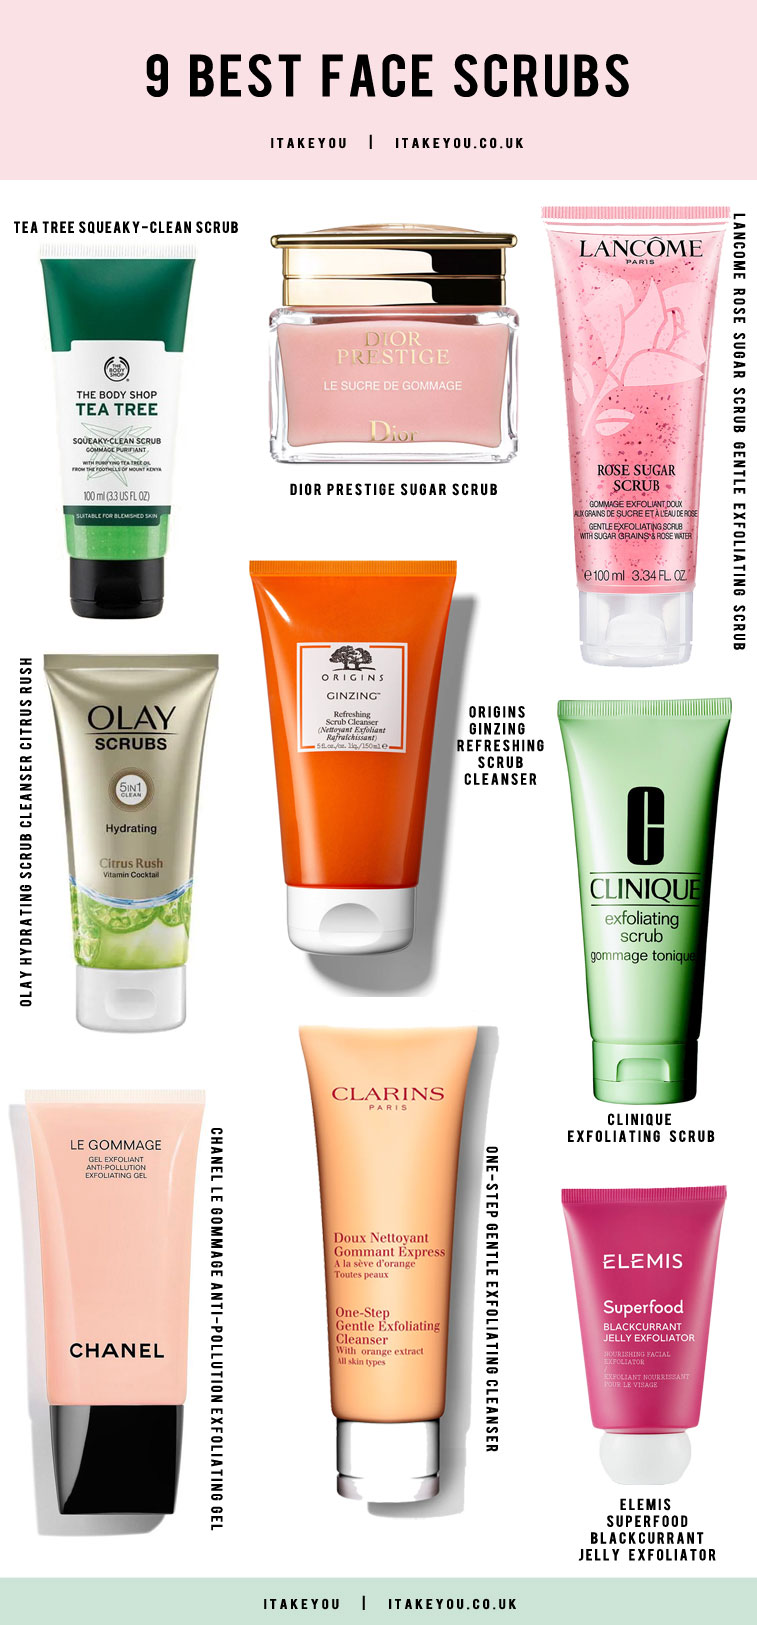 Best face scrub for glowing skin – 9 Best Face Scrubs